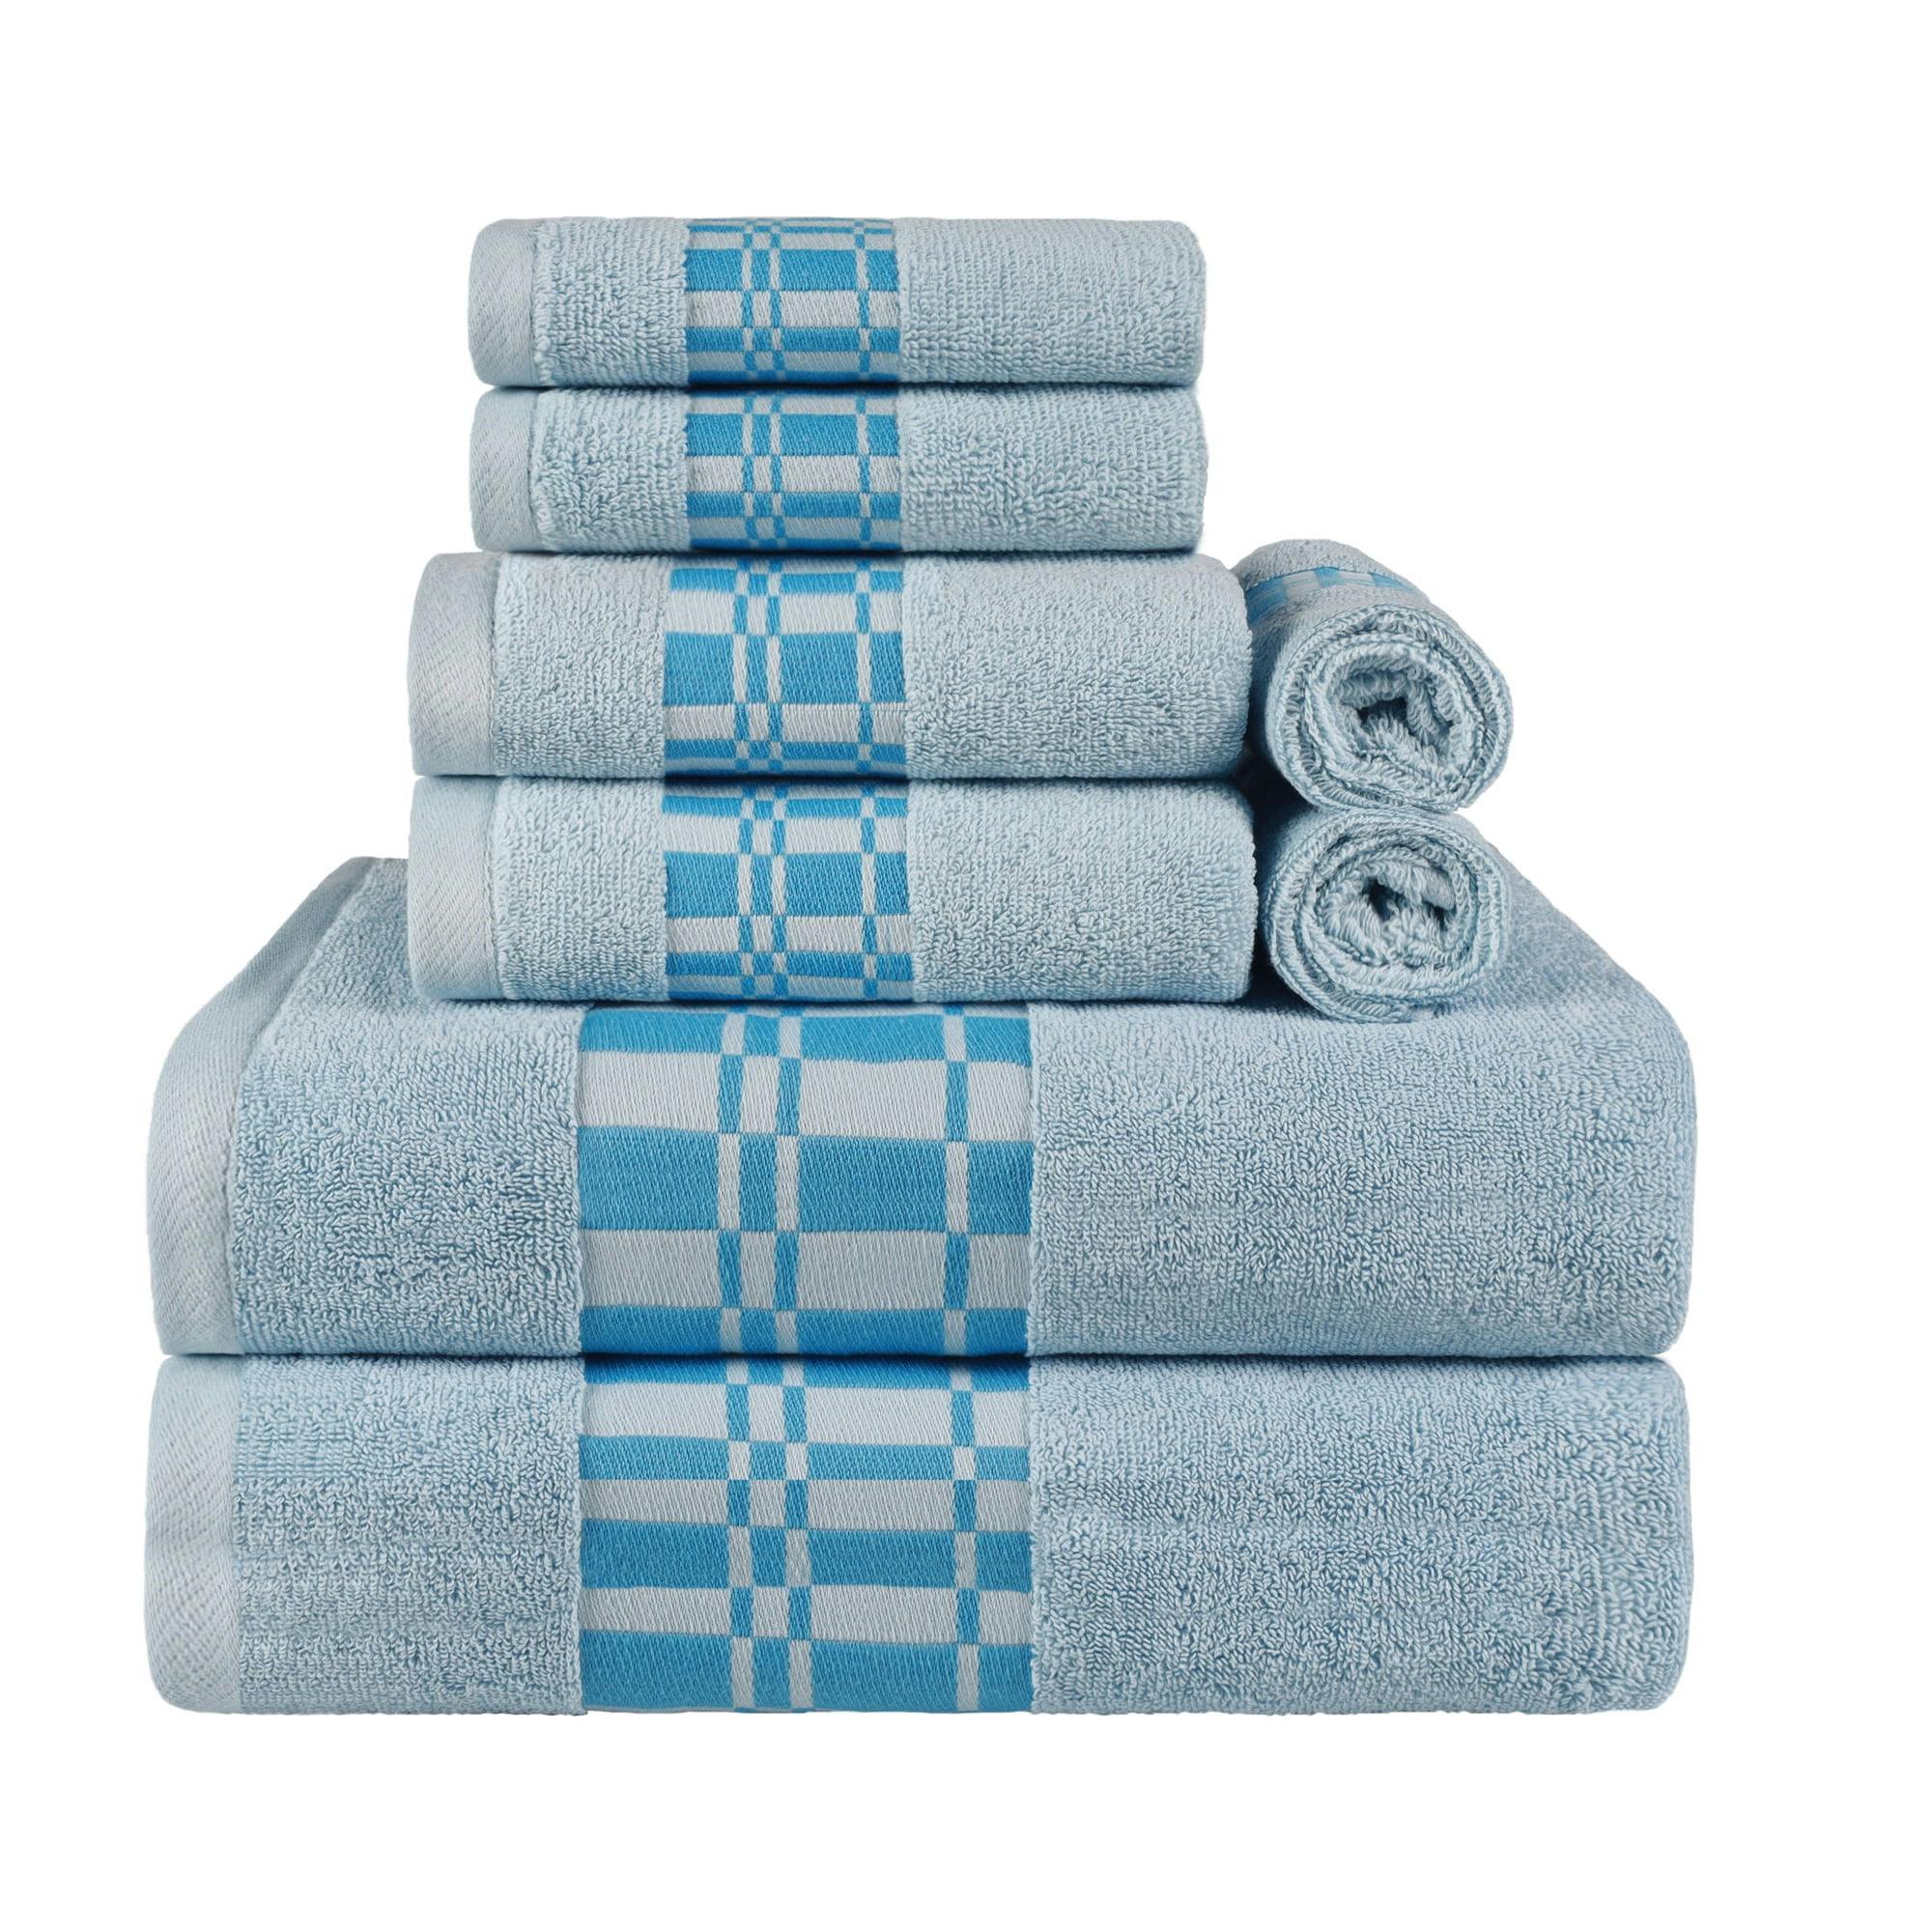 Luxurious Light Blue 8-Piece Cotton Bath Towel Set with Geometric Border